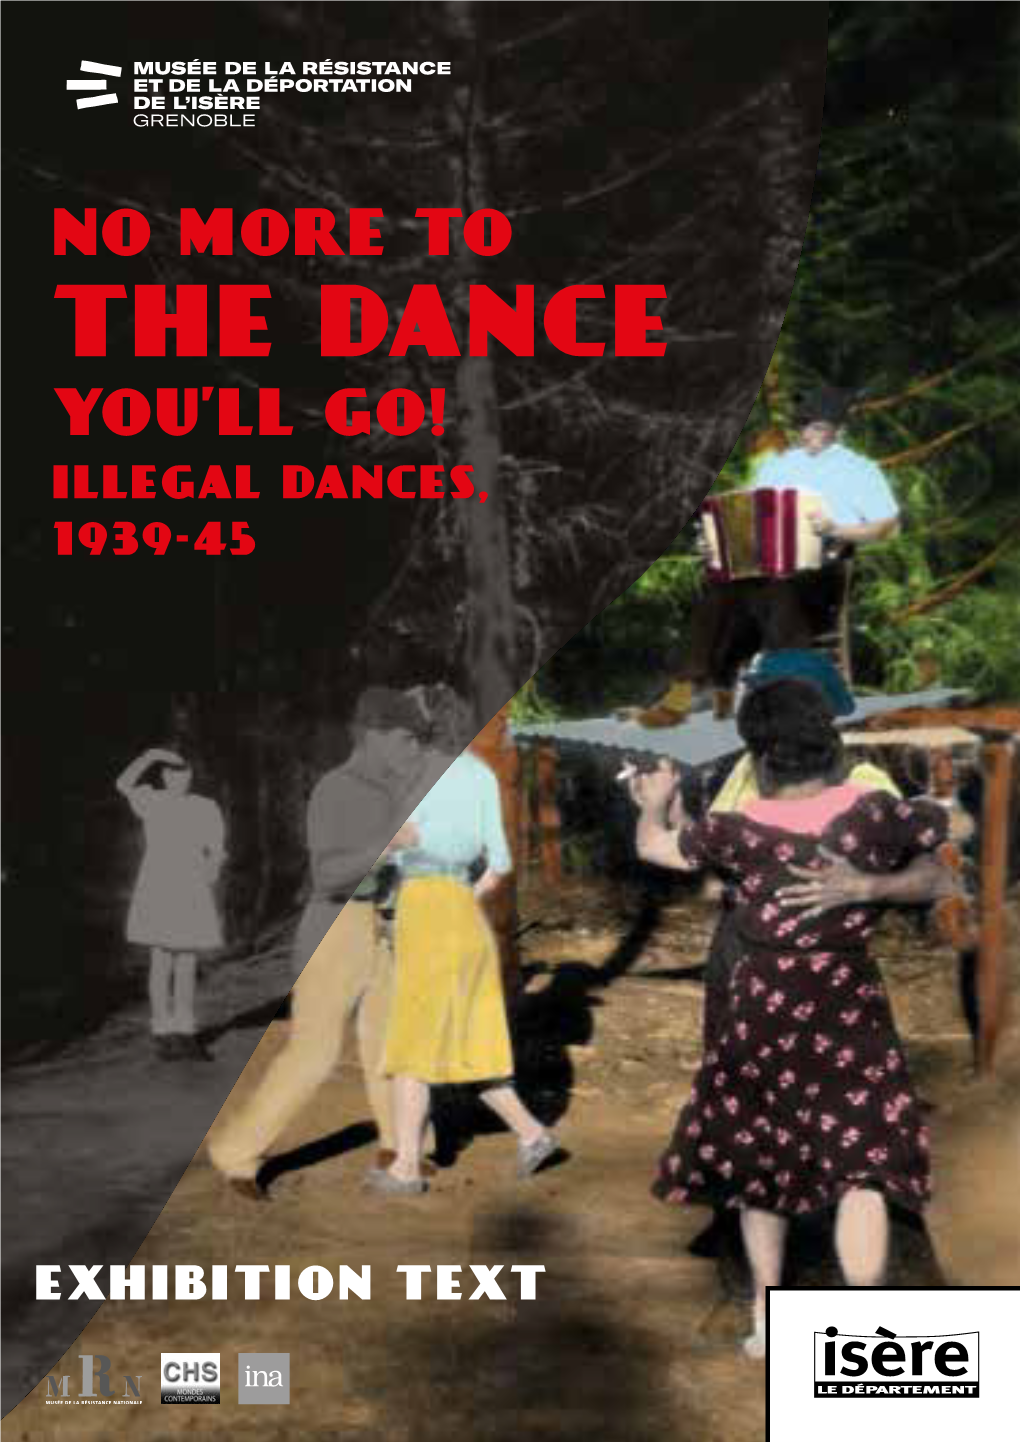 The Dance You’Ll Go! Illegal Dances, 1939-45